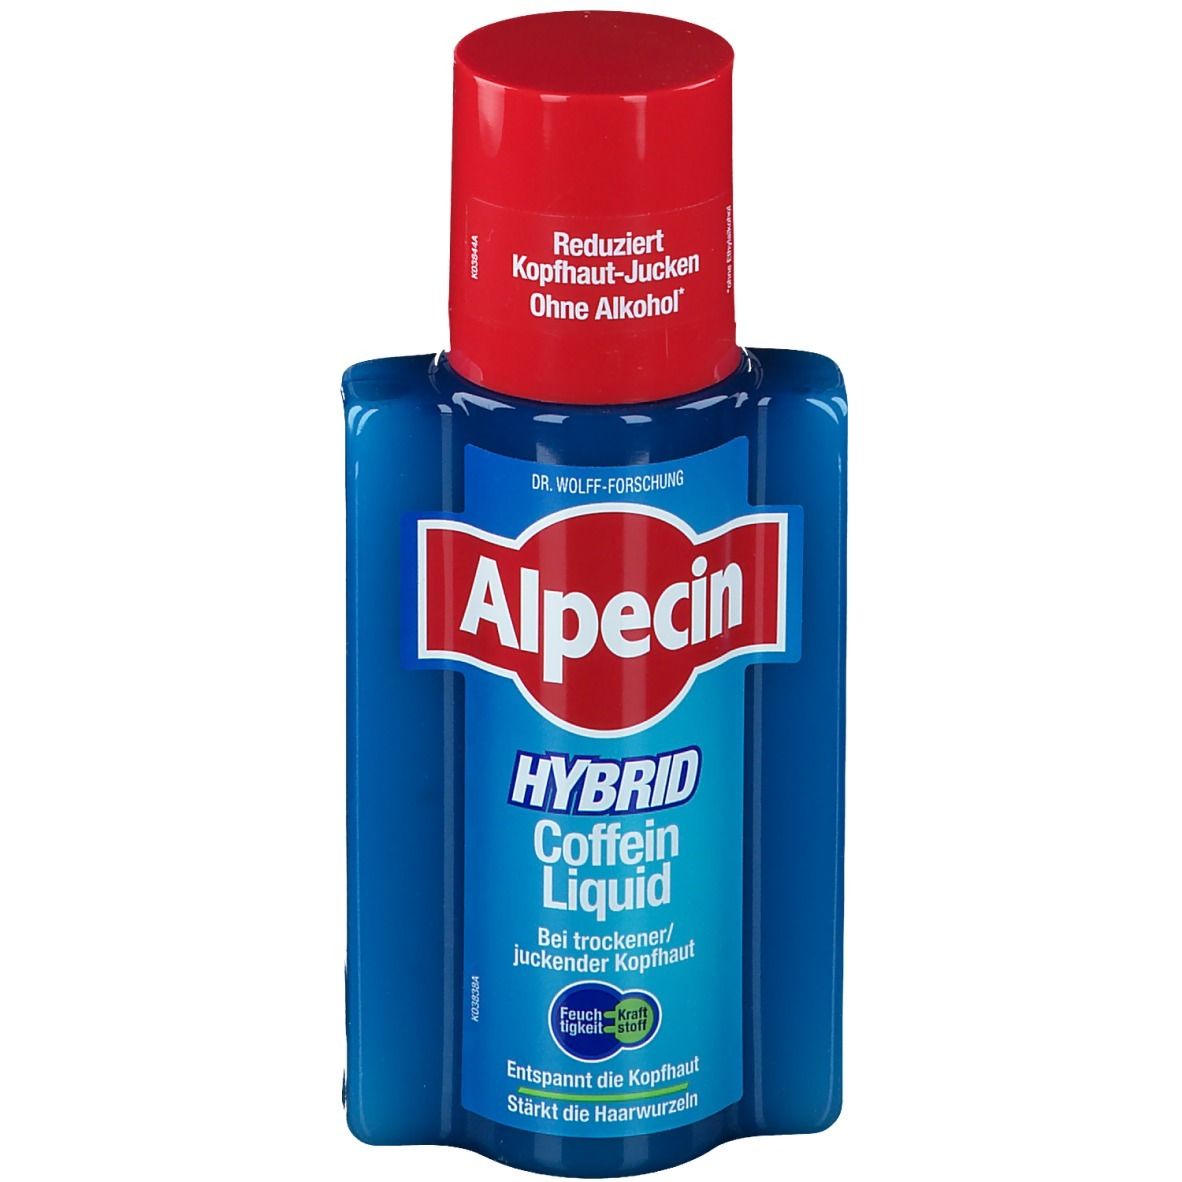 Image of Alpecin Hybrid Coffein Liquid